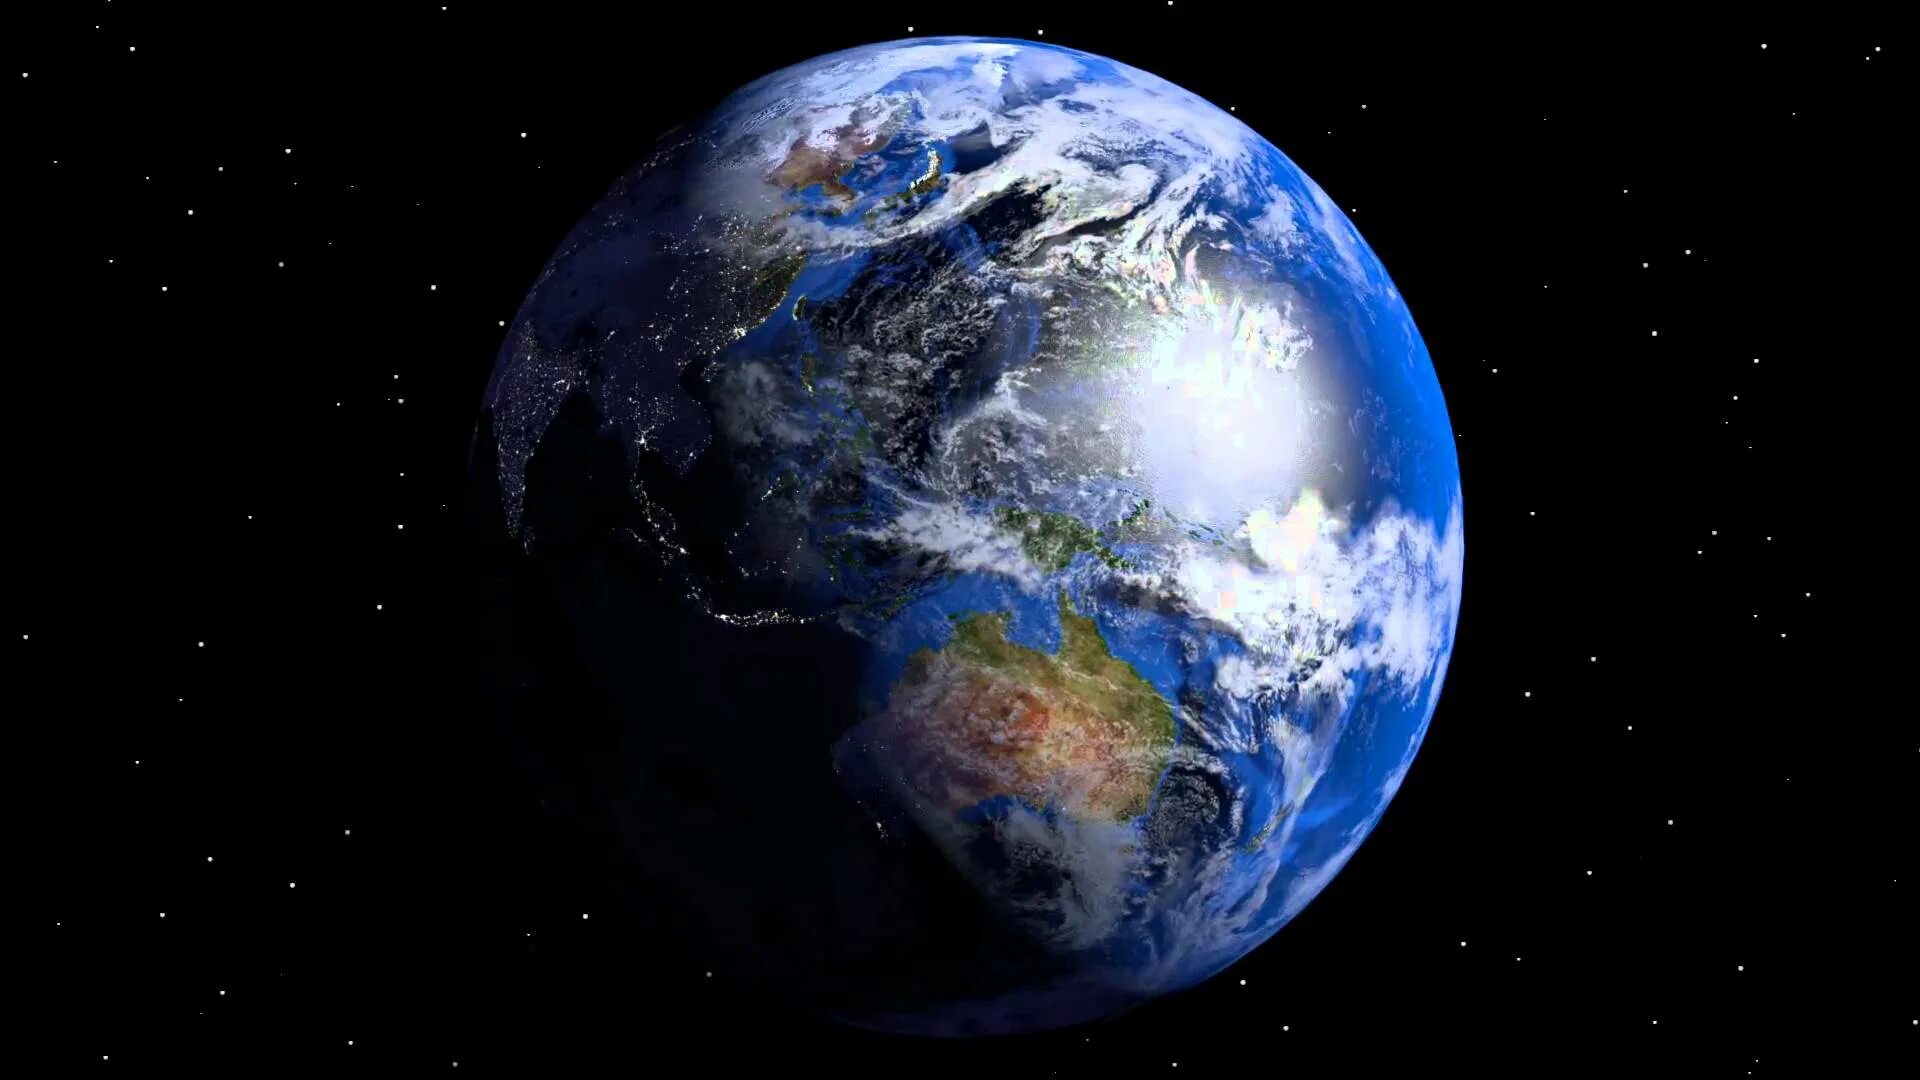 Вращение земли влияет на размер планеты. Изображение земли. Земной шар. Планета земля вращается. Земной шар из космоса.